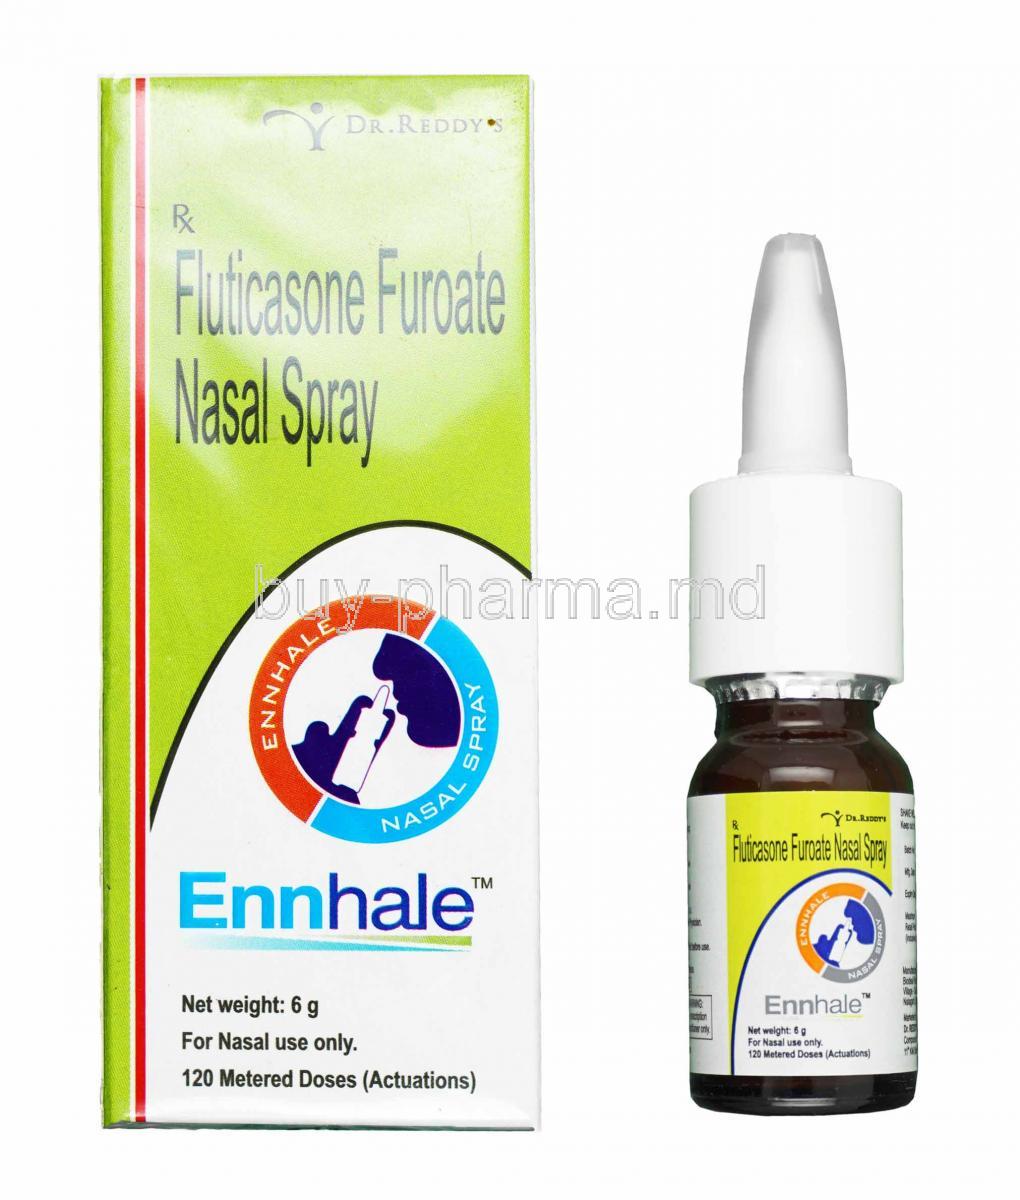 Ennhale Nasal Spray, Fluticasone Furoate box and bottle